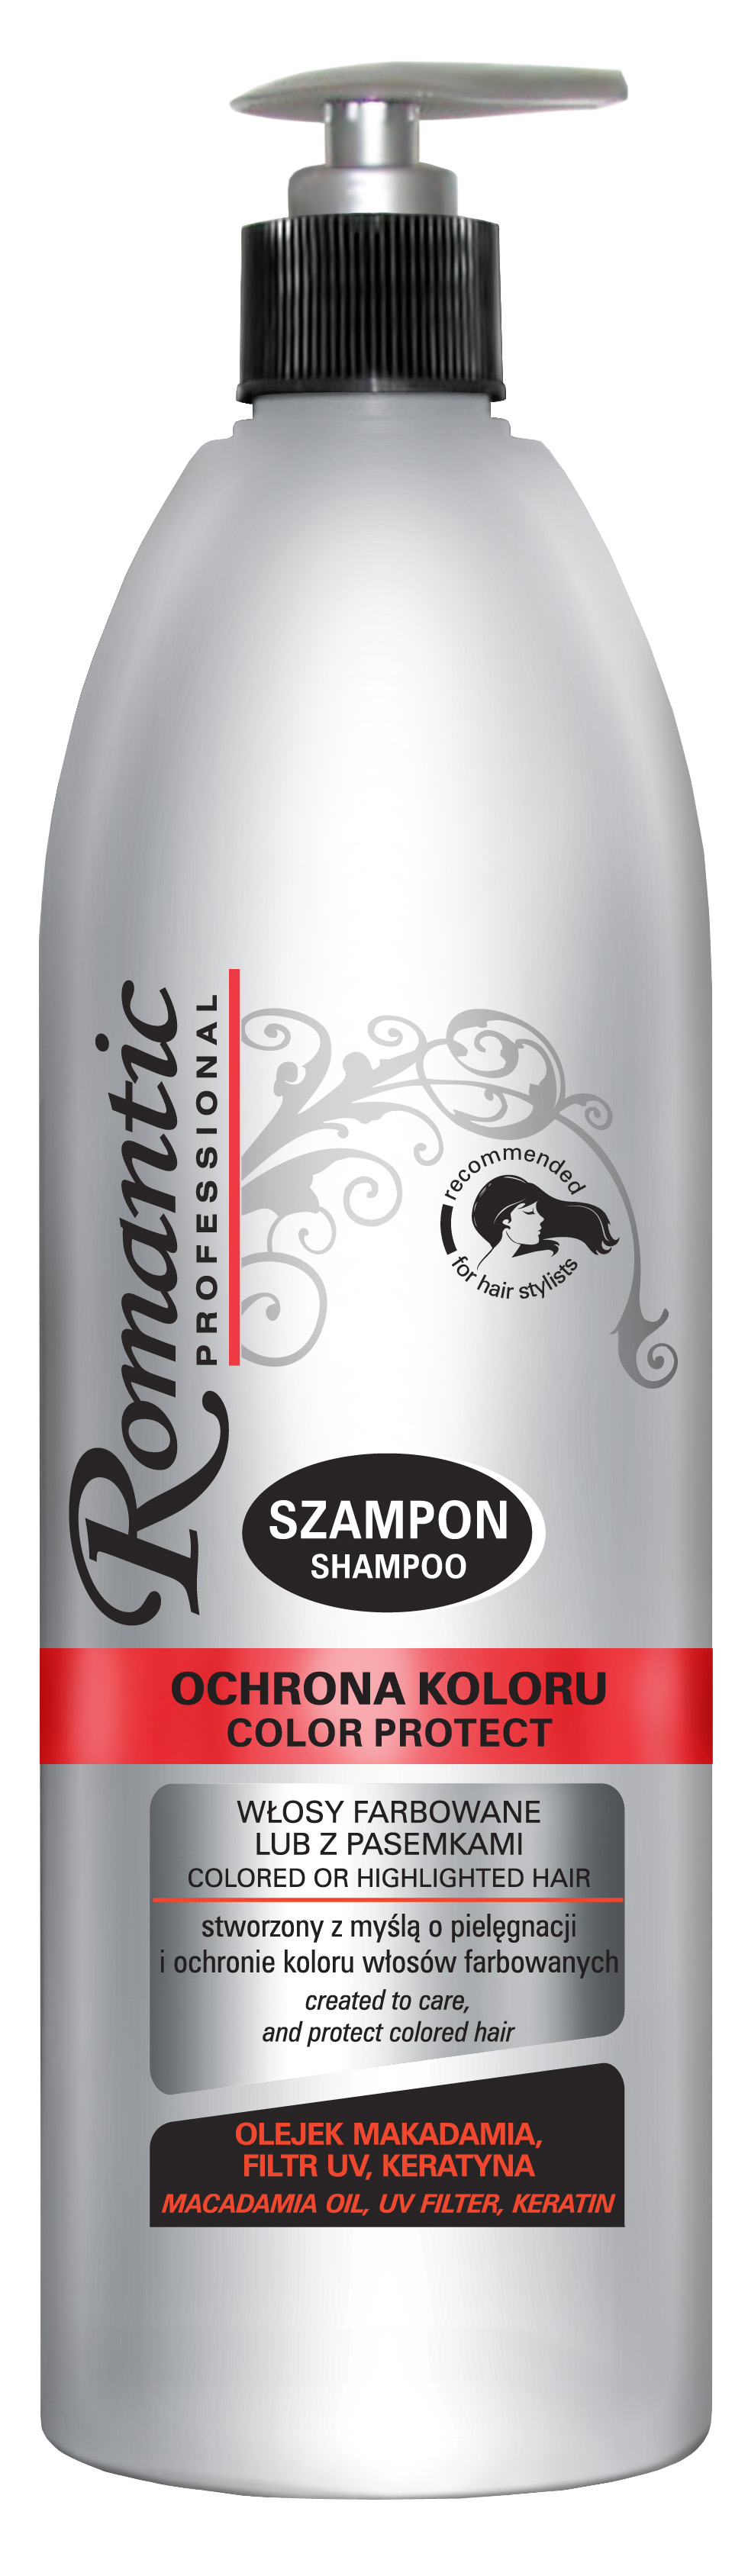 Romantic szampon ochrona kolory 950ml